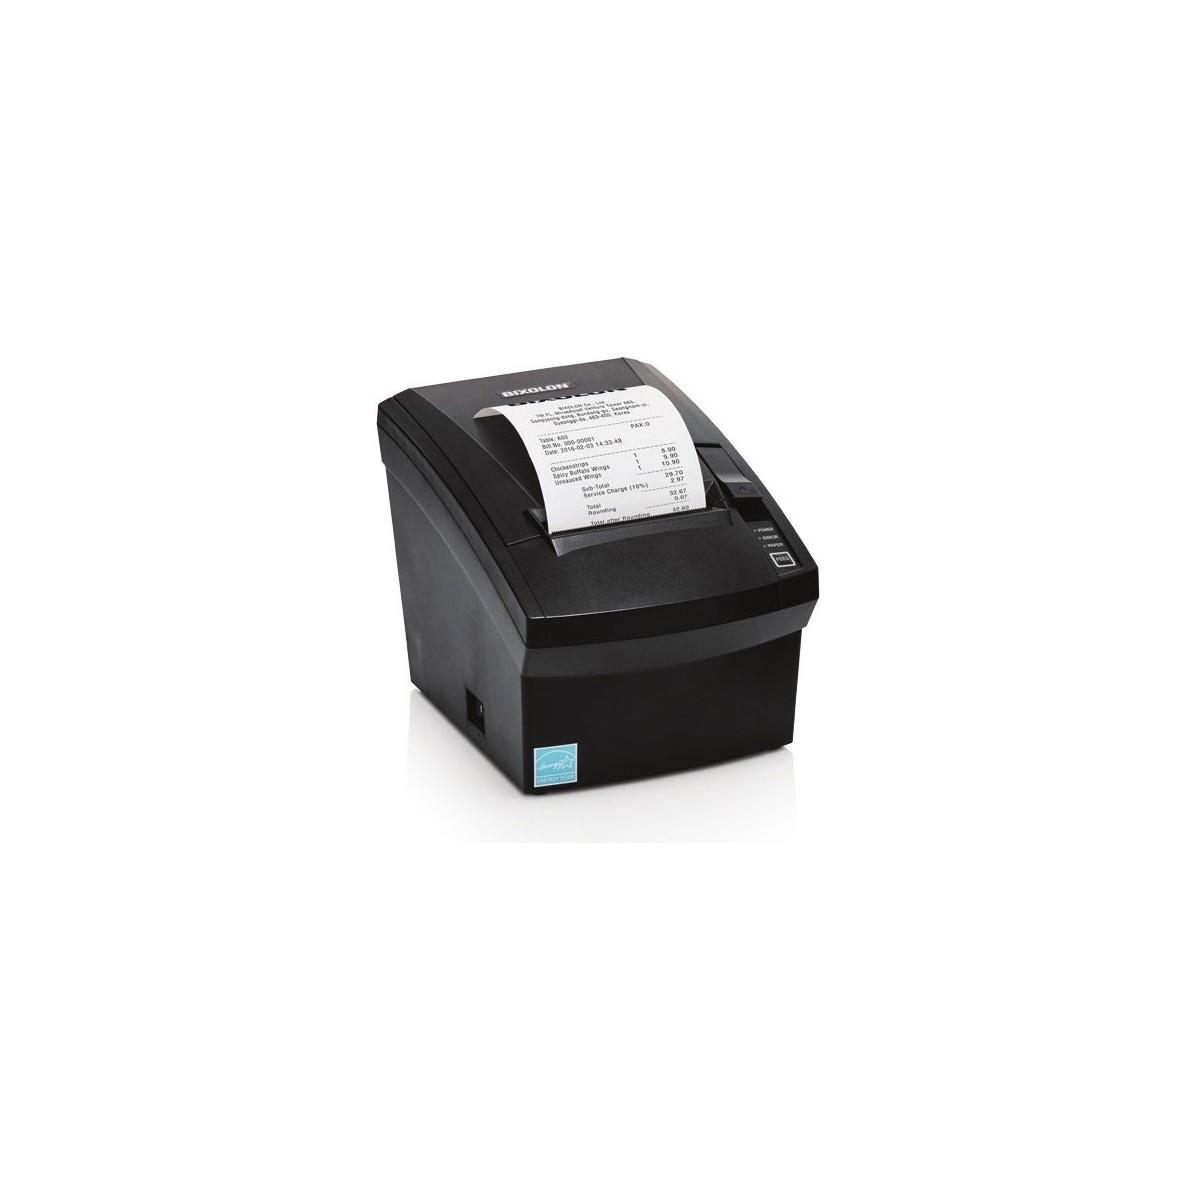 BIXOLON SRP-330IICOESK-BEG - Thermal - POS printer - 180 x 180 DPI - 200 mm-sec - 8 cm - Wired